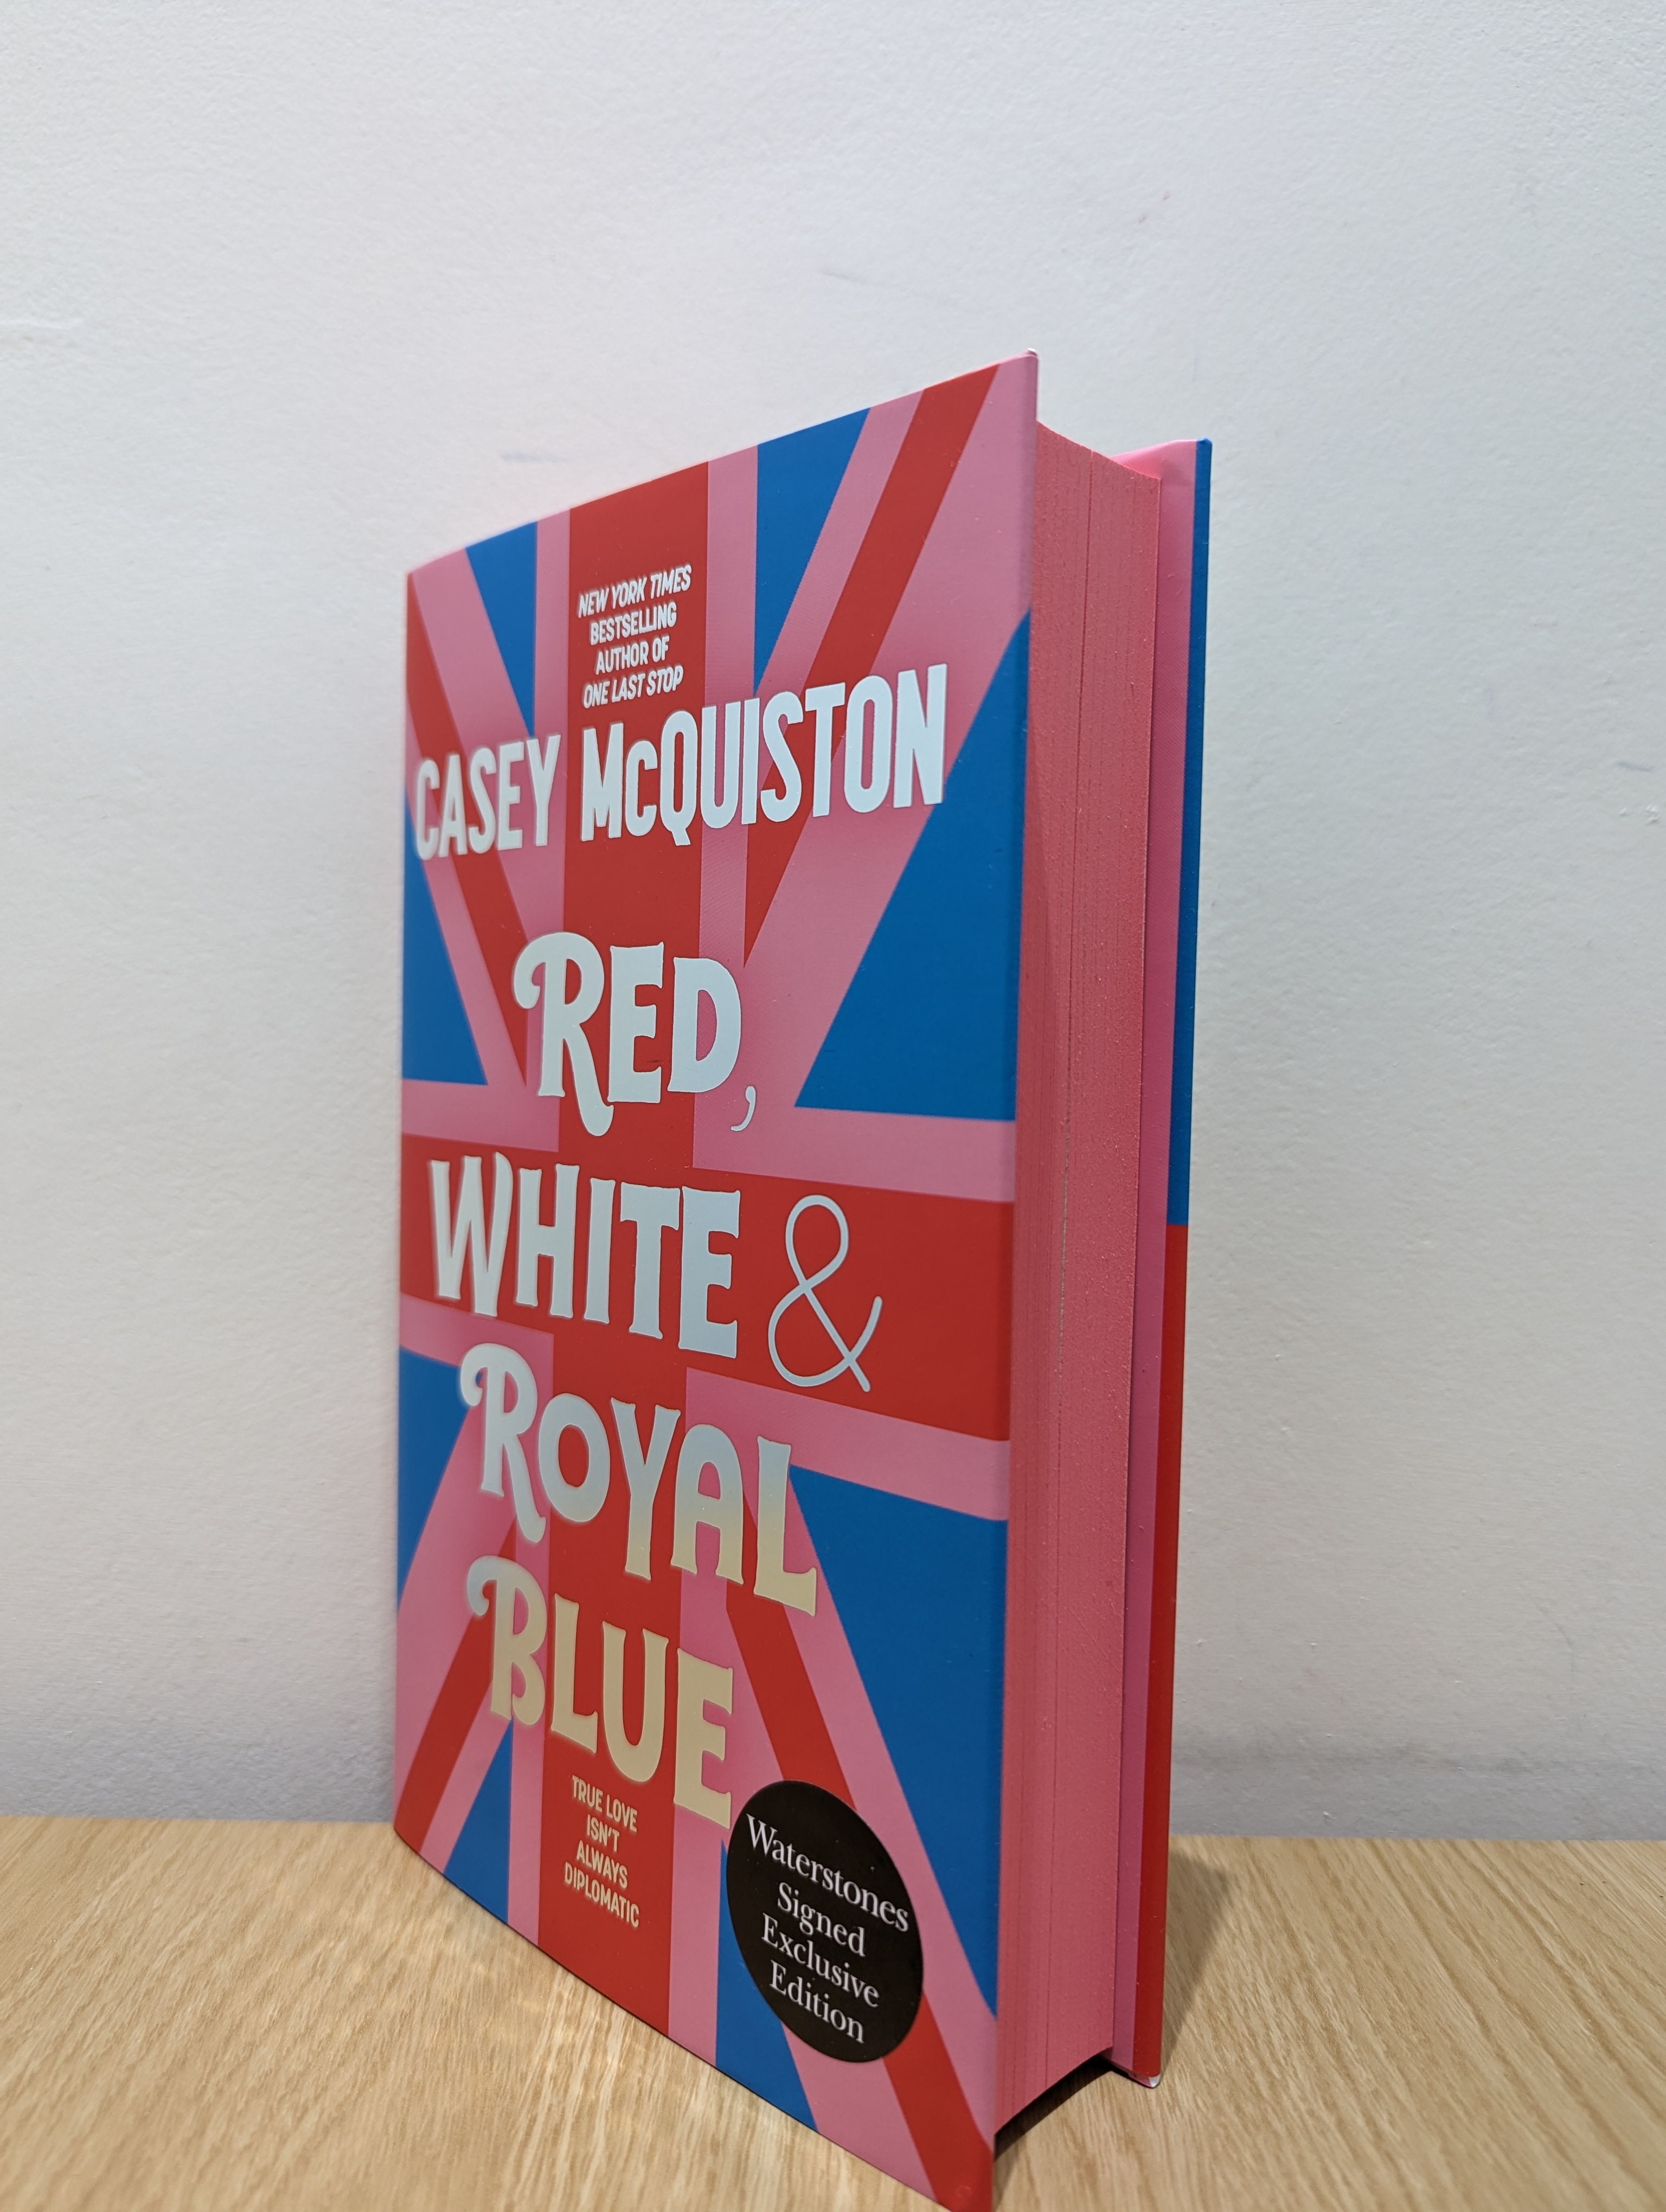 Red, White & Royal Blue: Collector's Edition: A Novel: 9781250856036:  McQuiston, Casey: Books 